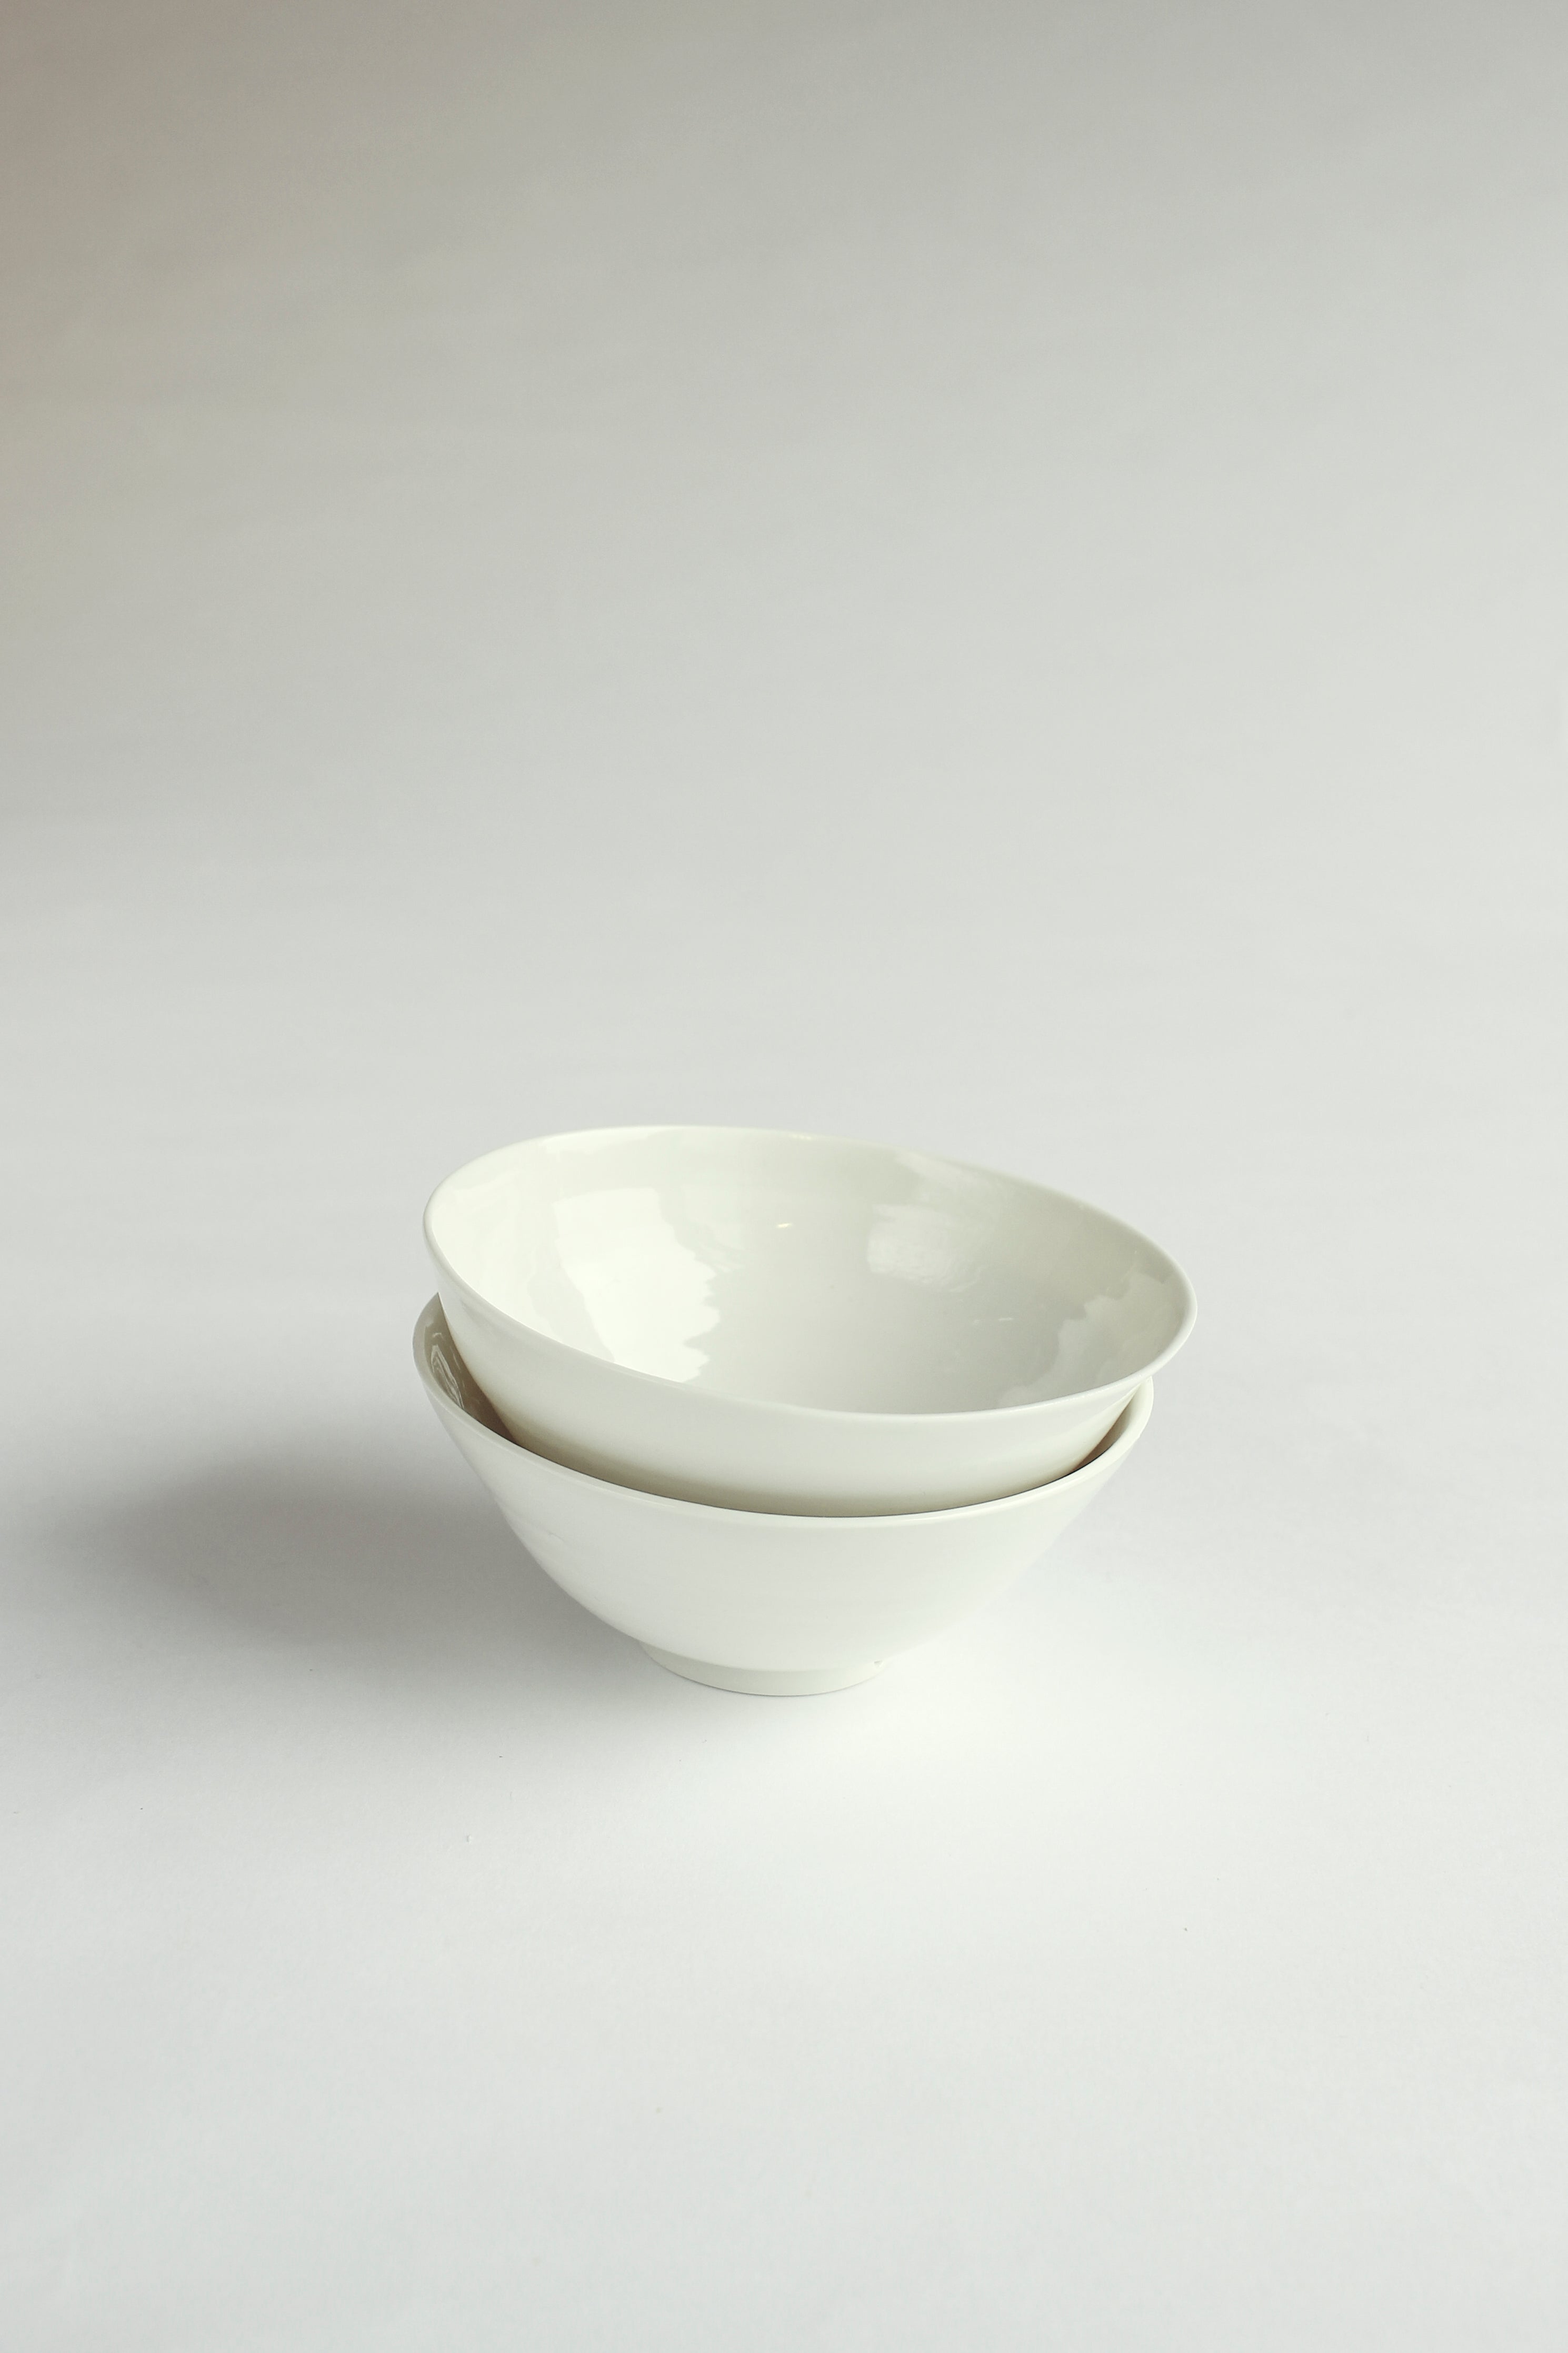 Tribute to Craftsmanship / Two bowls / Set 1